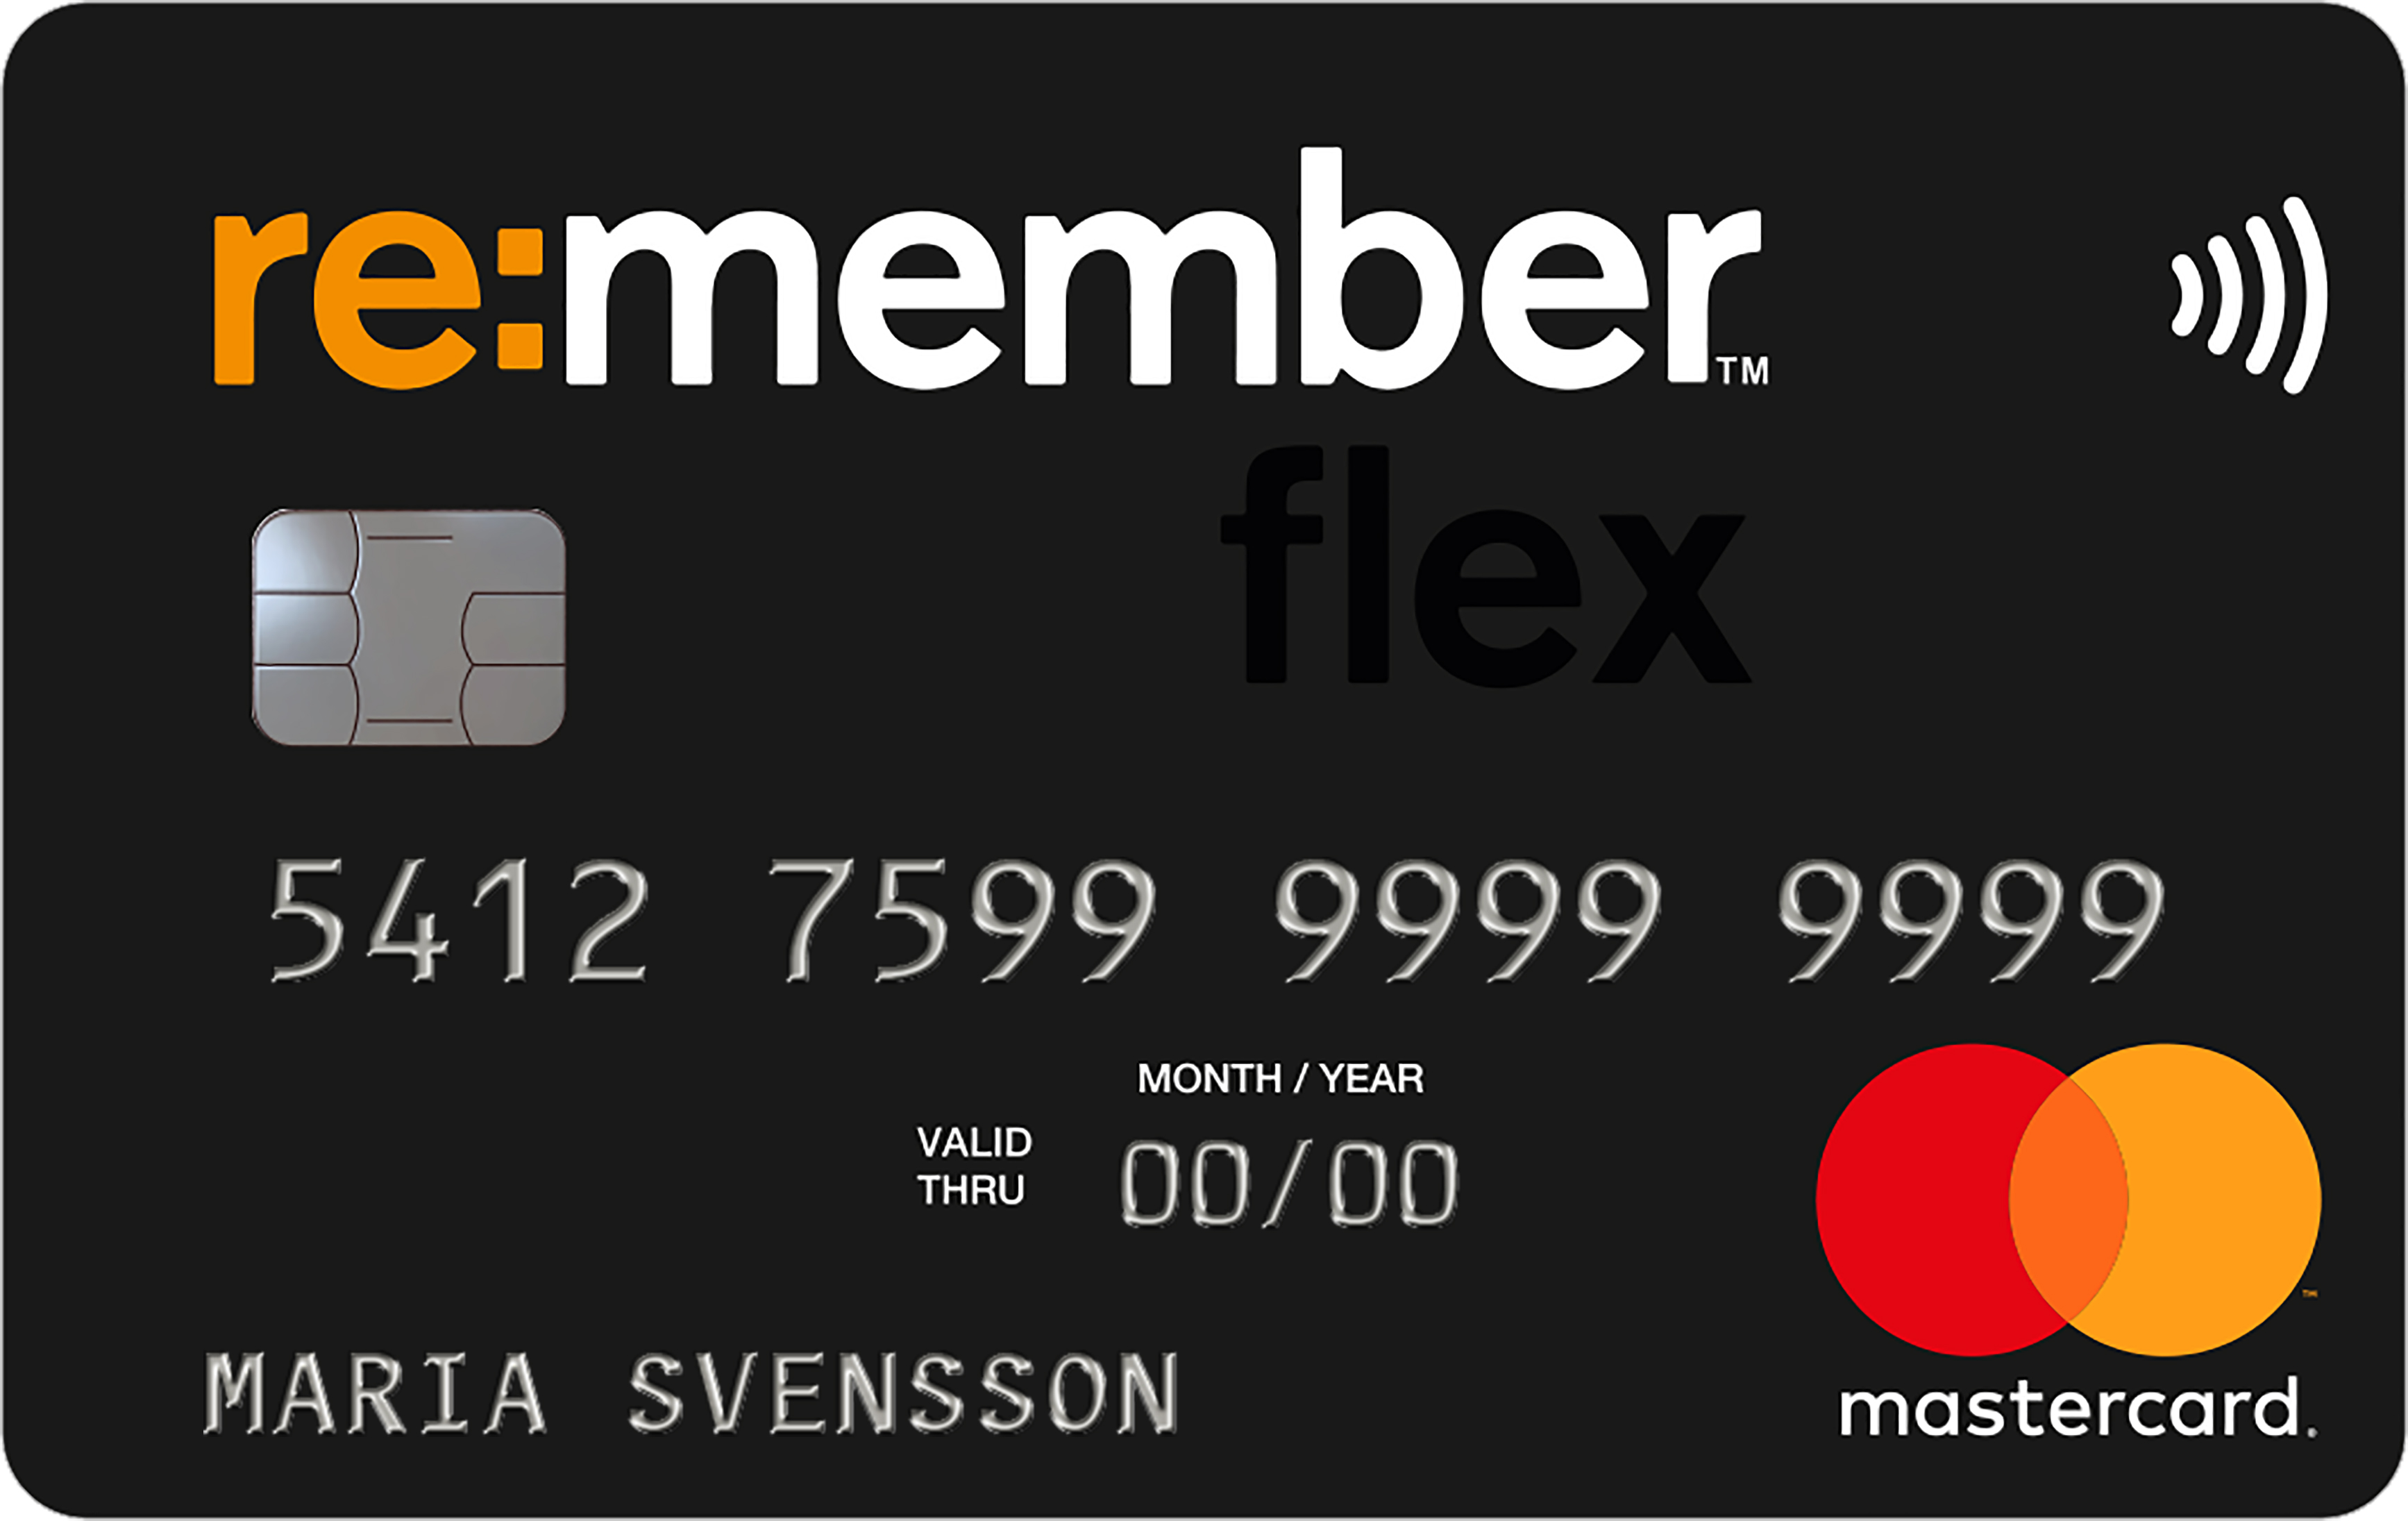 The Best Credit Card in Norway - Mastercard | localmarket.no